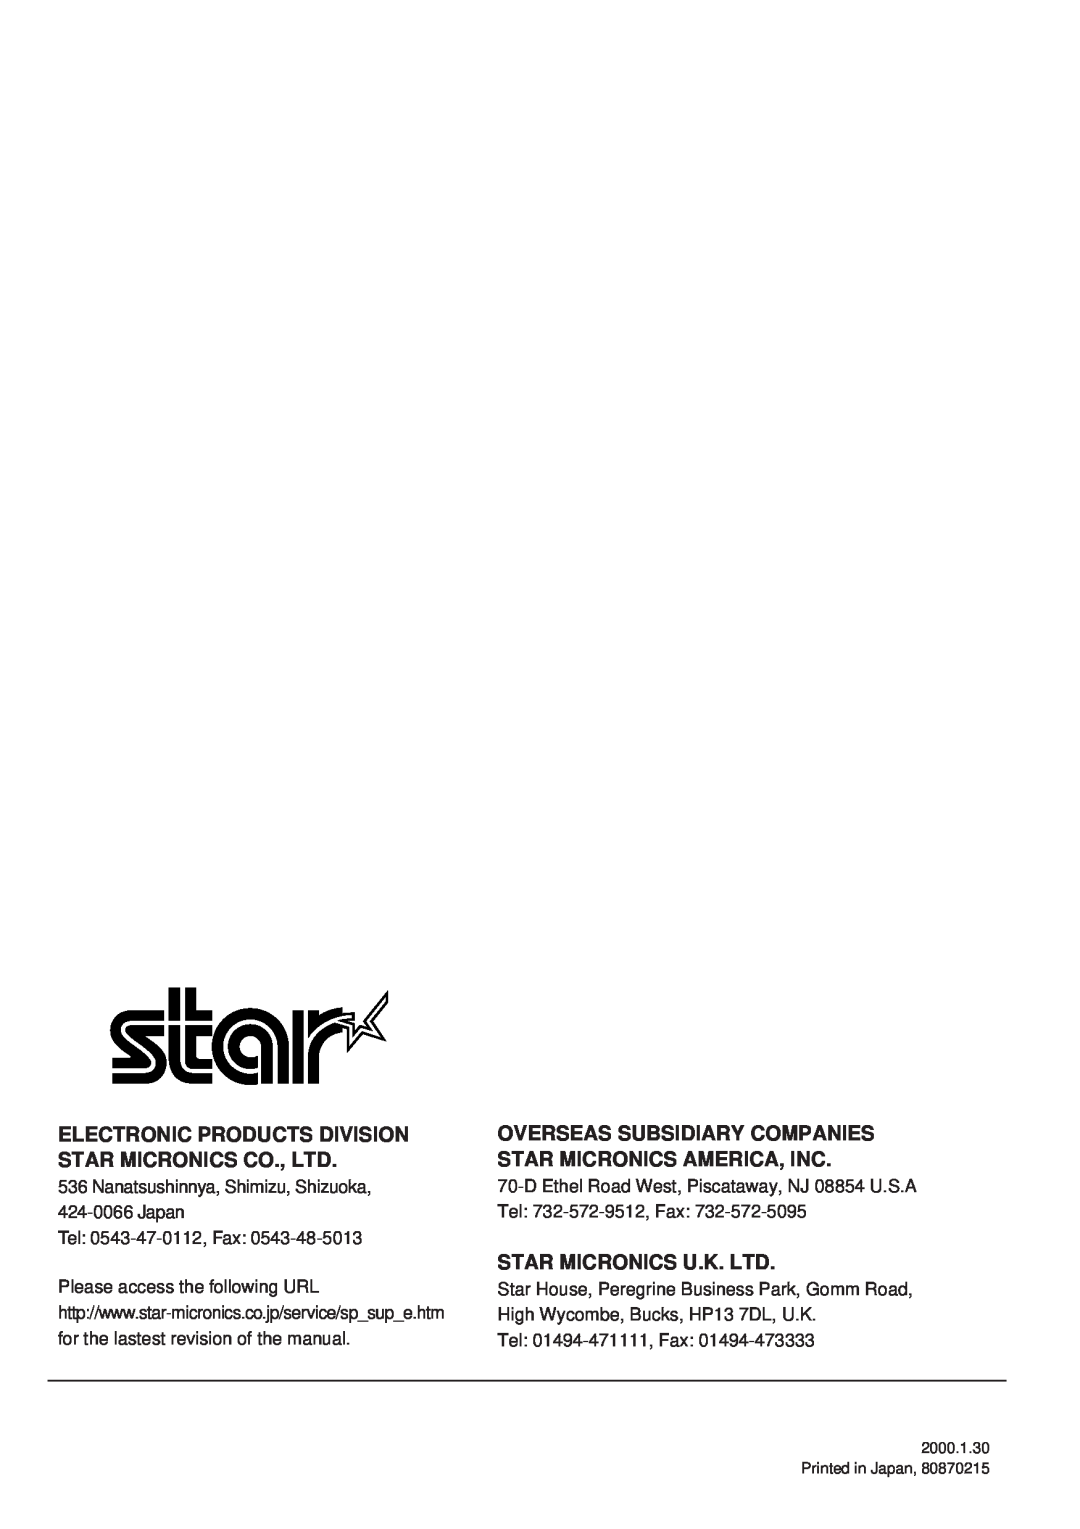 Star Micronics TSP2000 Overseas Subsidiary Companies Star Micronics America, Inc, Tel 0543-47-0112, Fax, Printed in Japan 